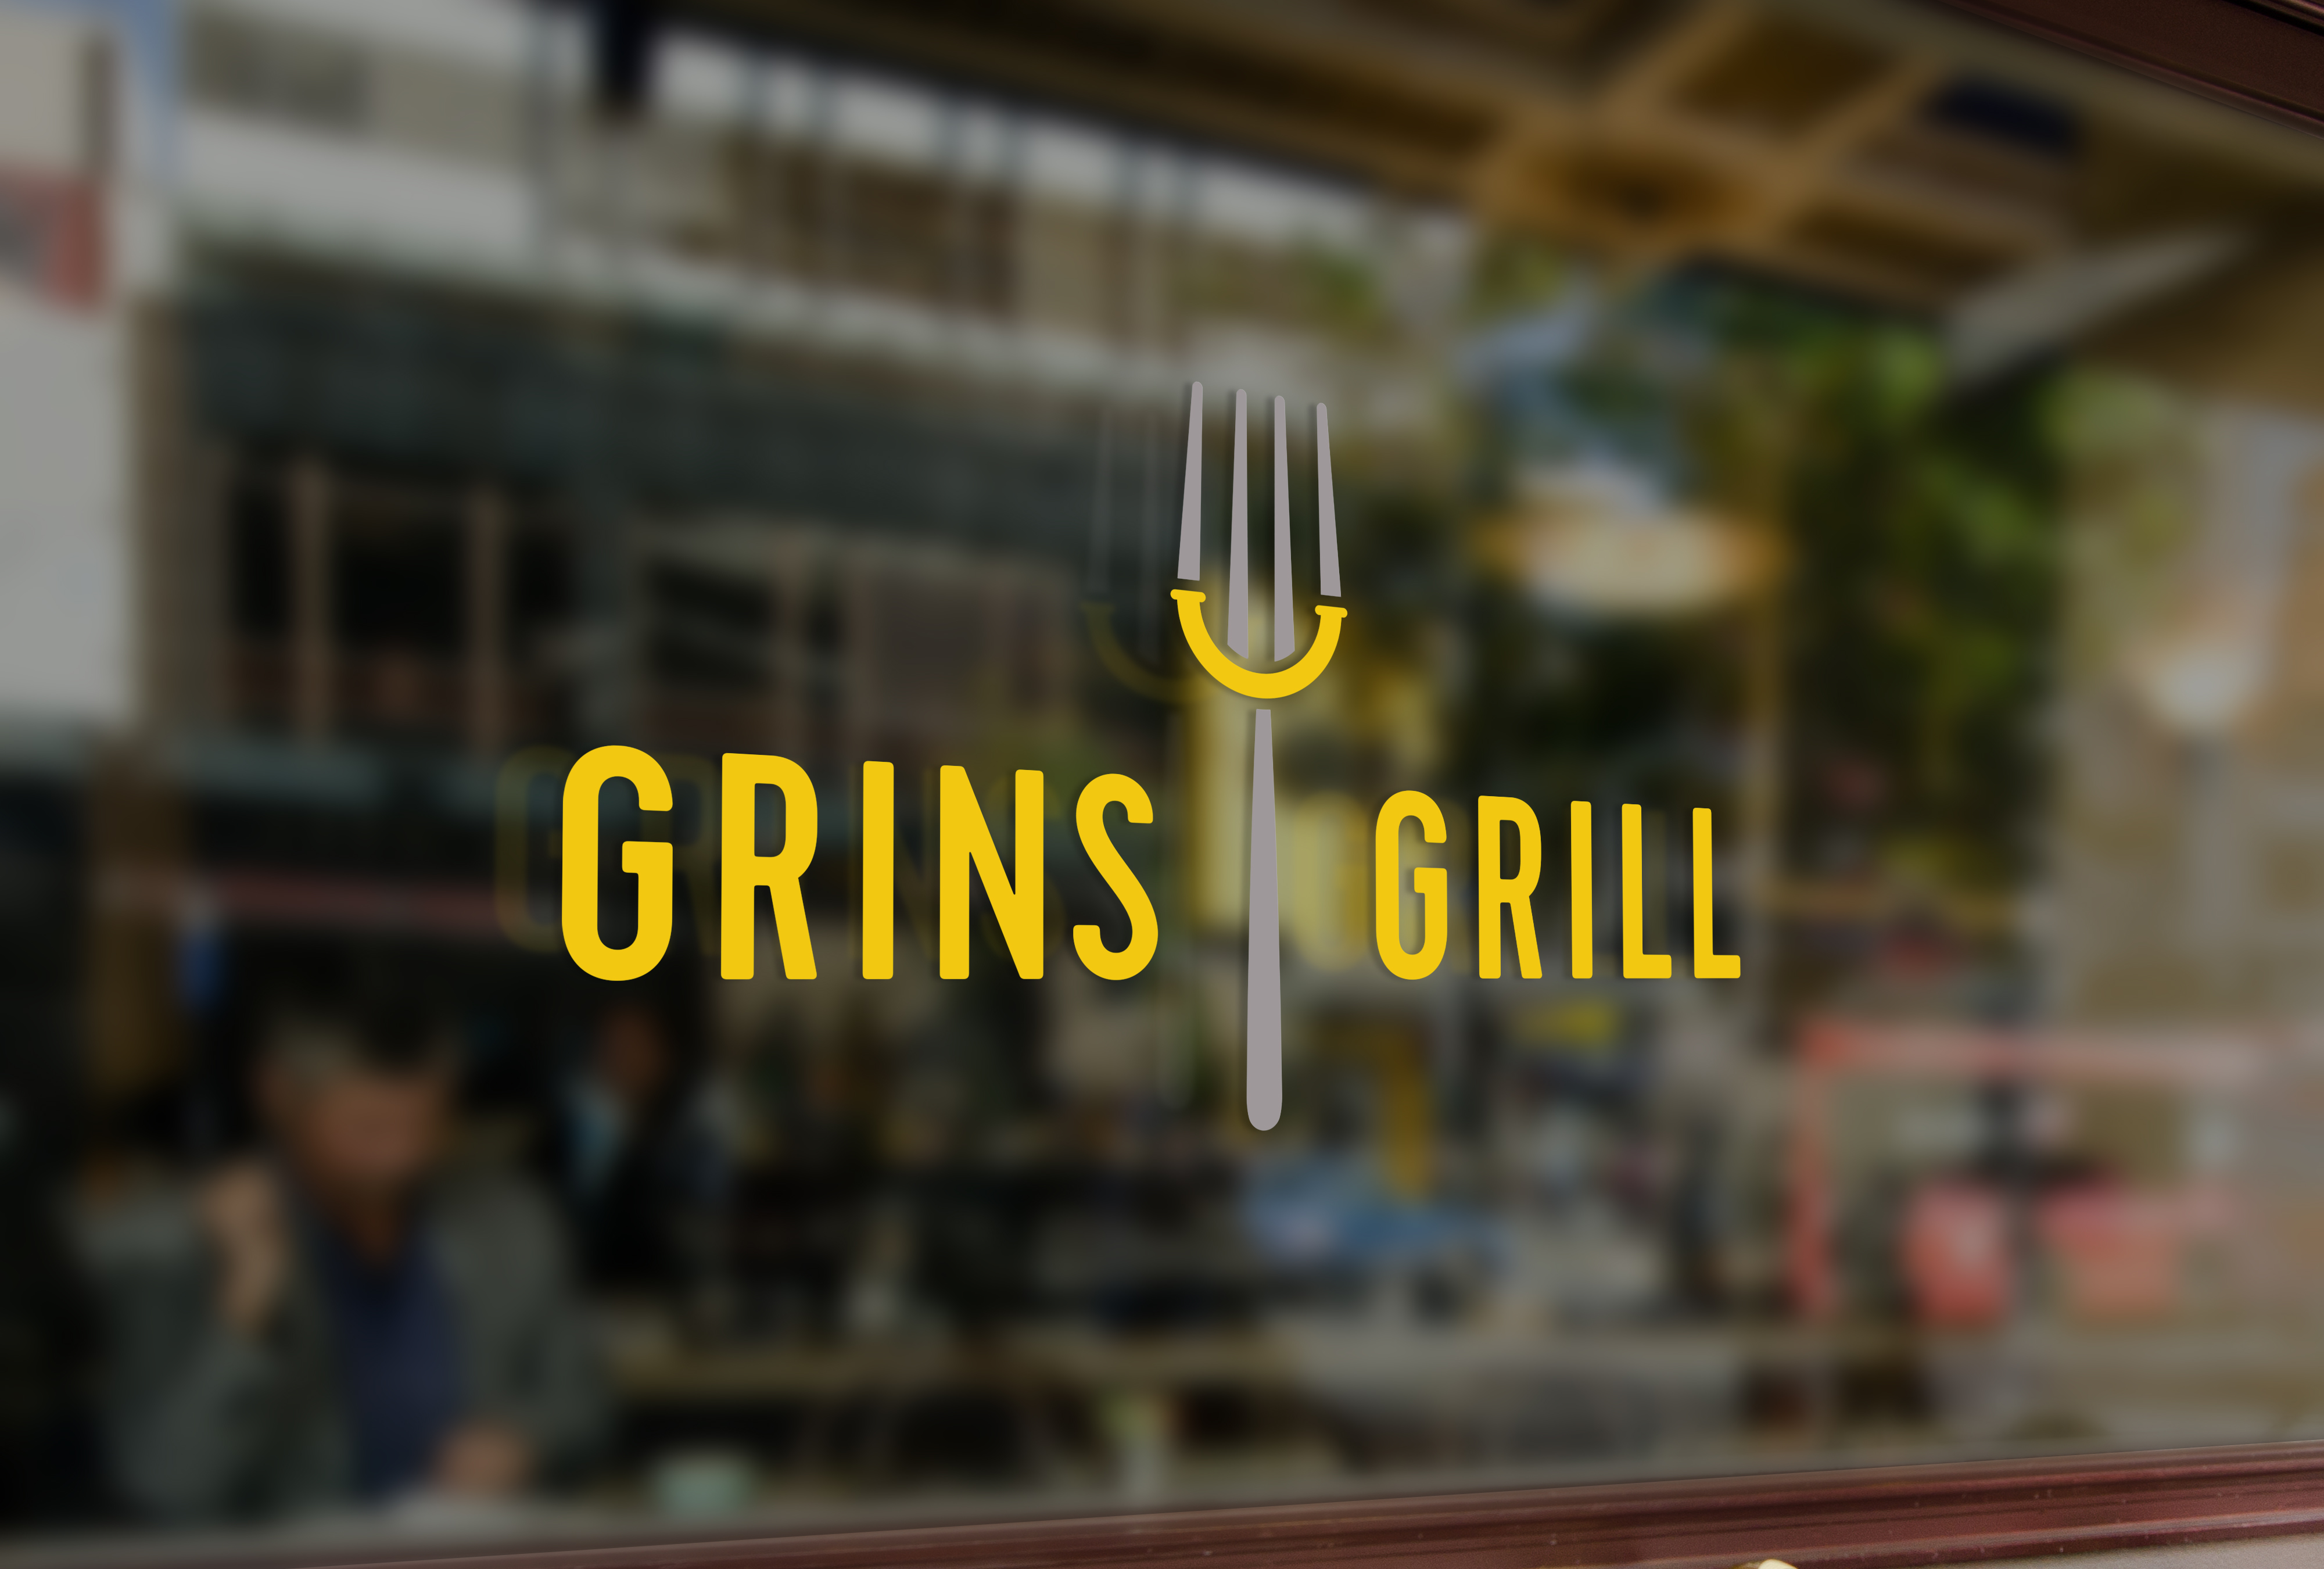 Download Grins Grill Logo Mockup By Barak Tamayo On Dribbble PSD Mockup Templates